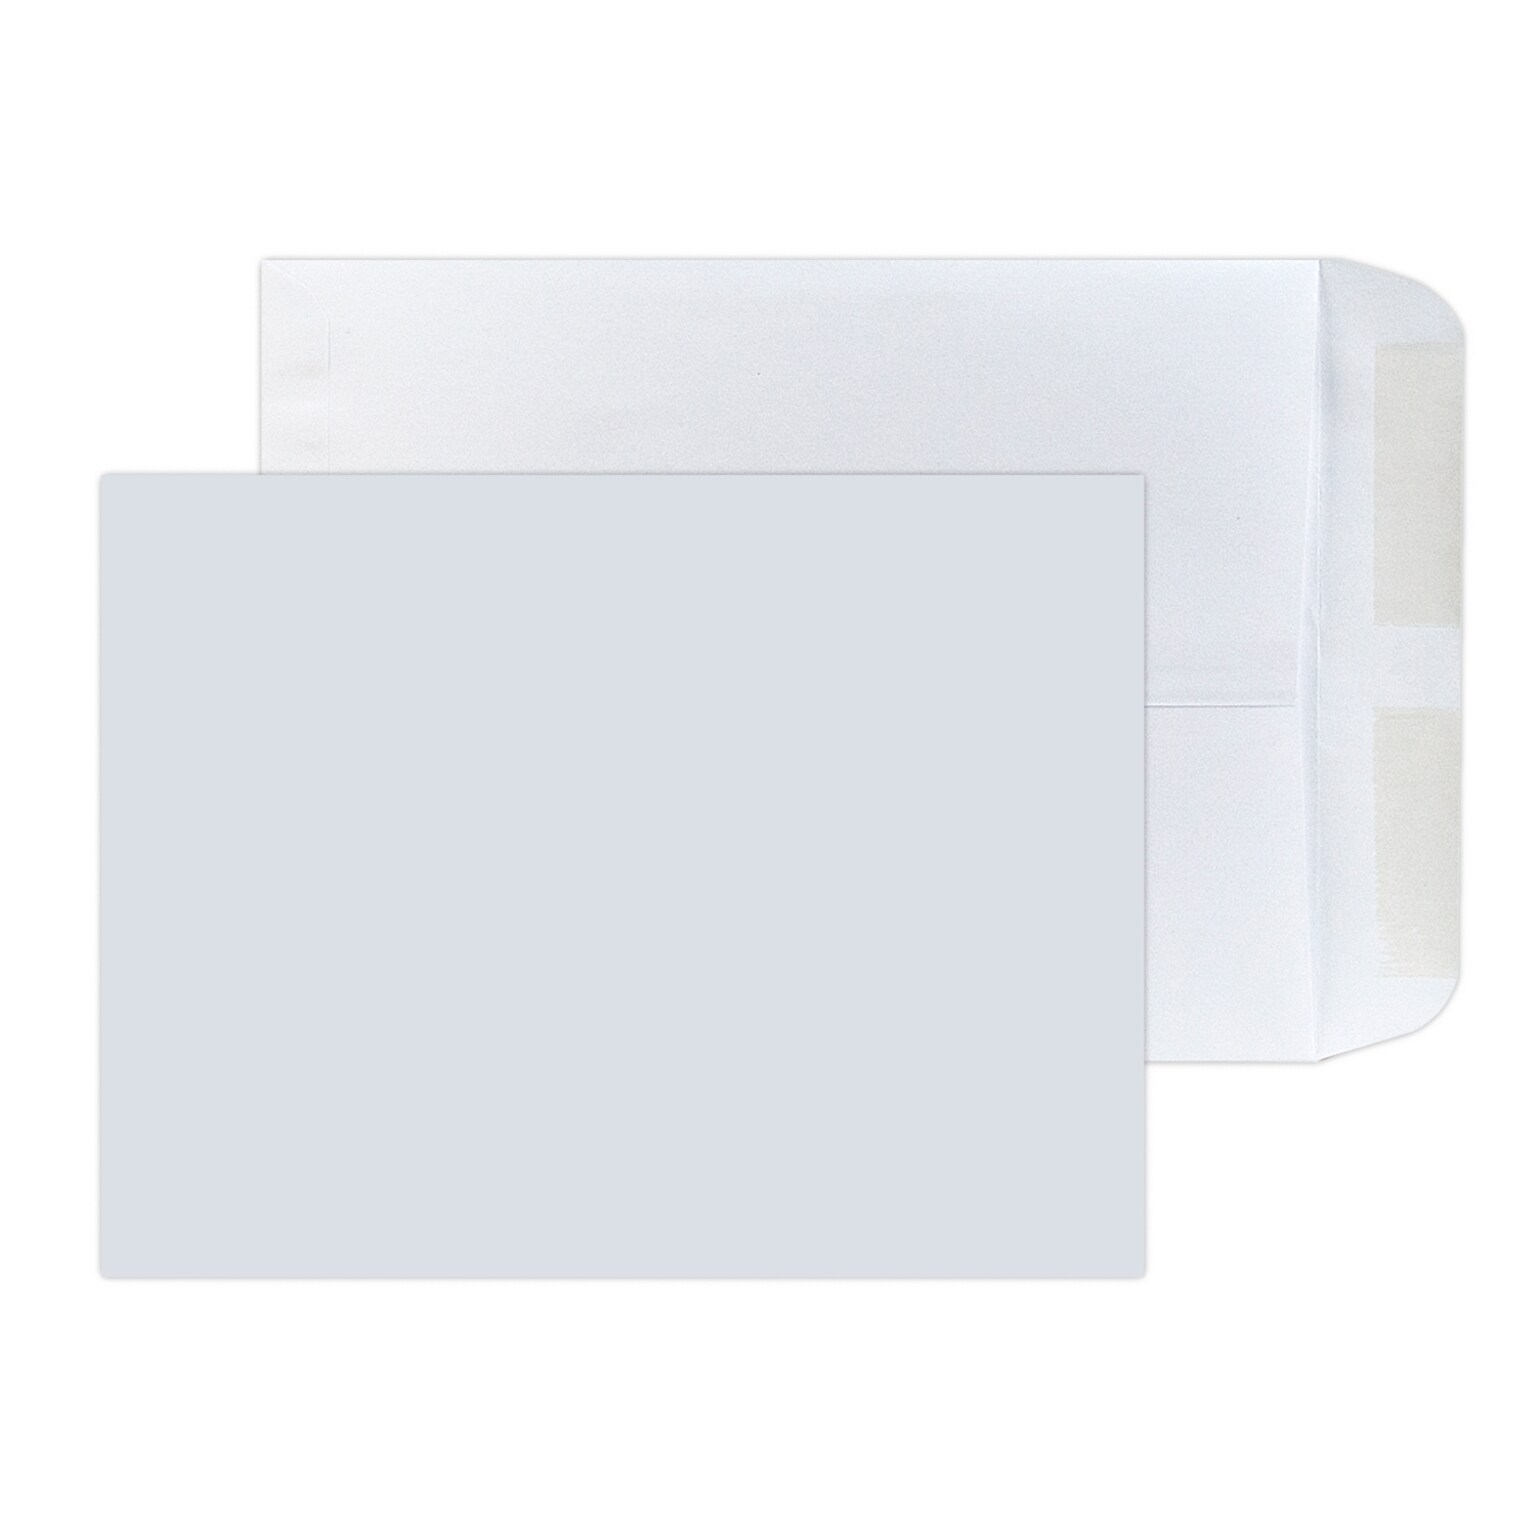 9 x 12 Standard Catalog Envelopes, 28# White Wove, No Imprint, 250 / Pack